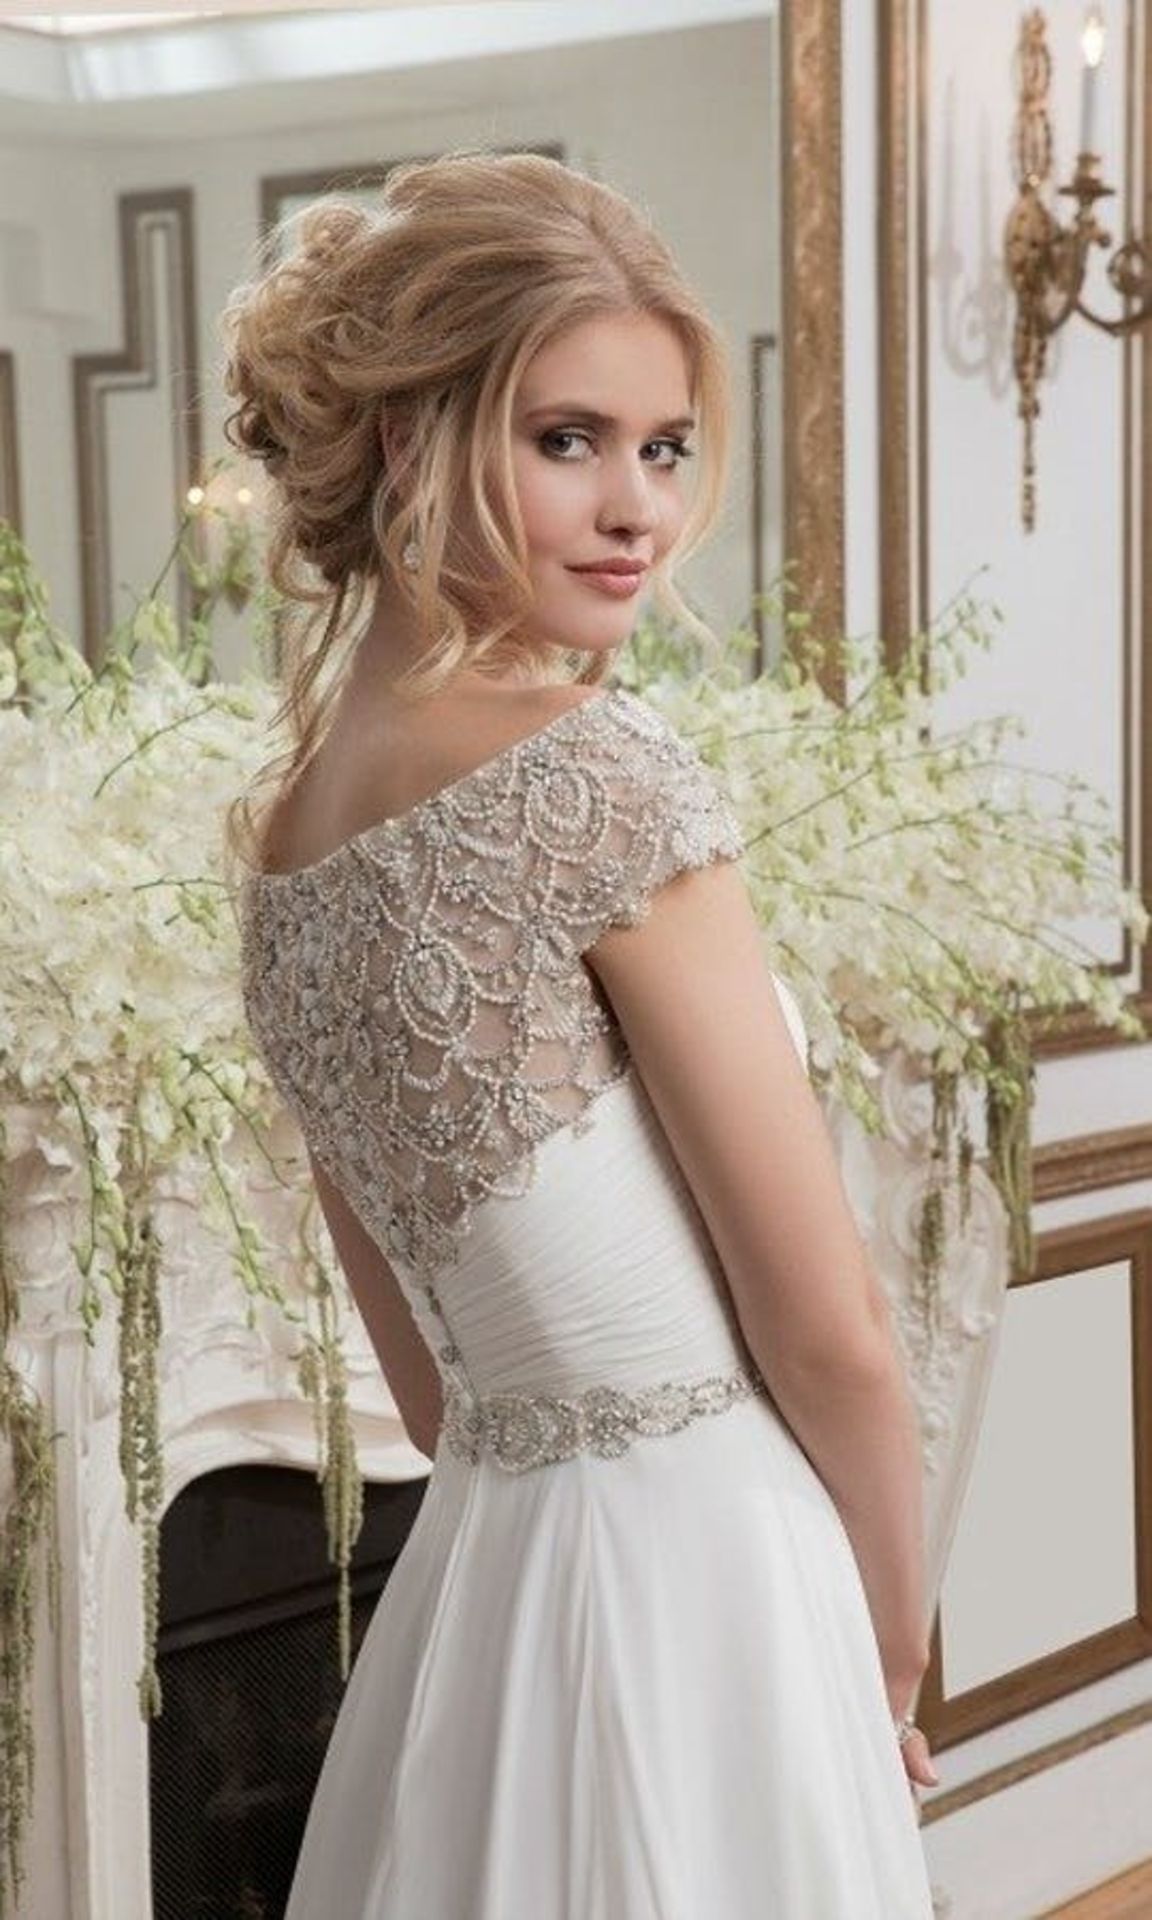 1 x Justin Alexander 'Aphrodite' Chiffon Bridal Gown - UK Size 16 - RRP £1,415 - Image 16 of 23